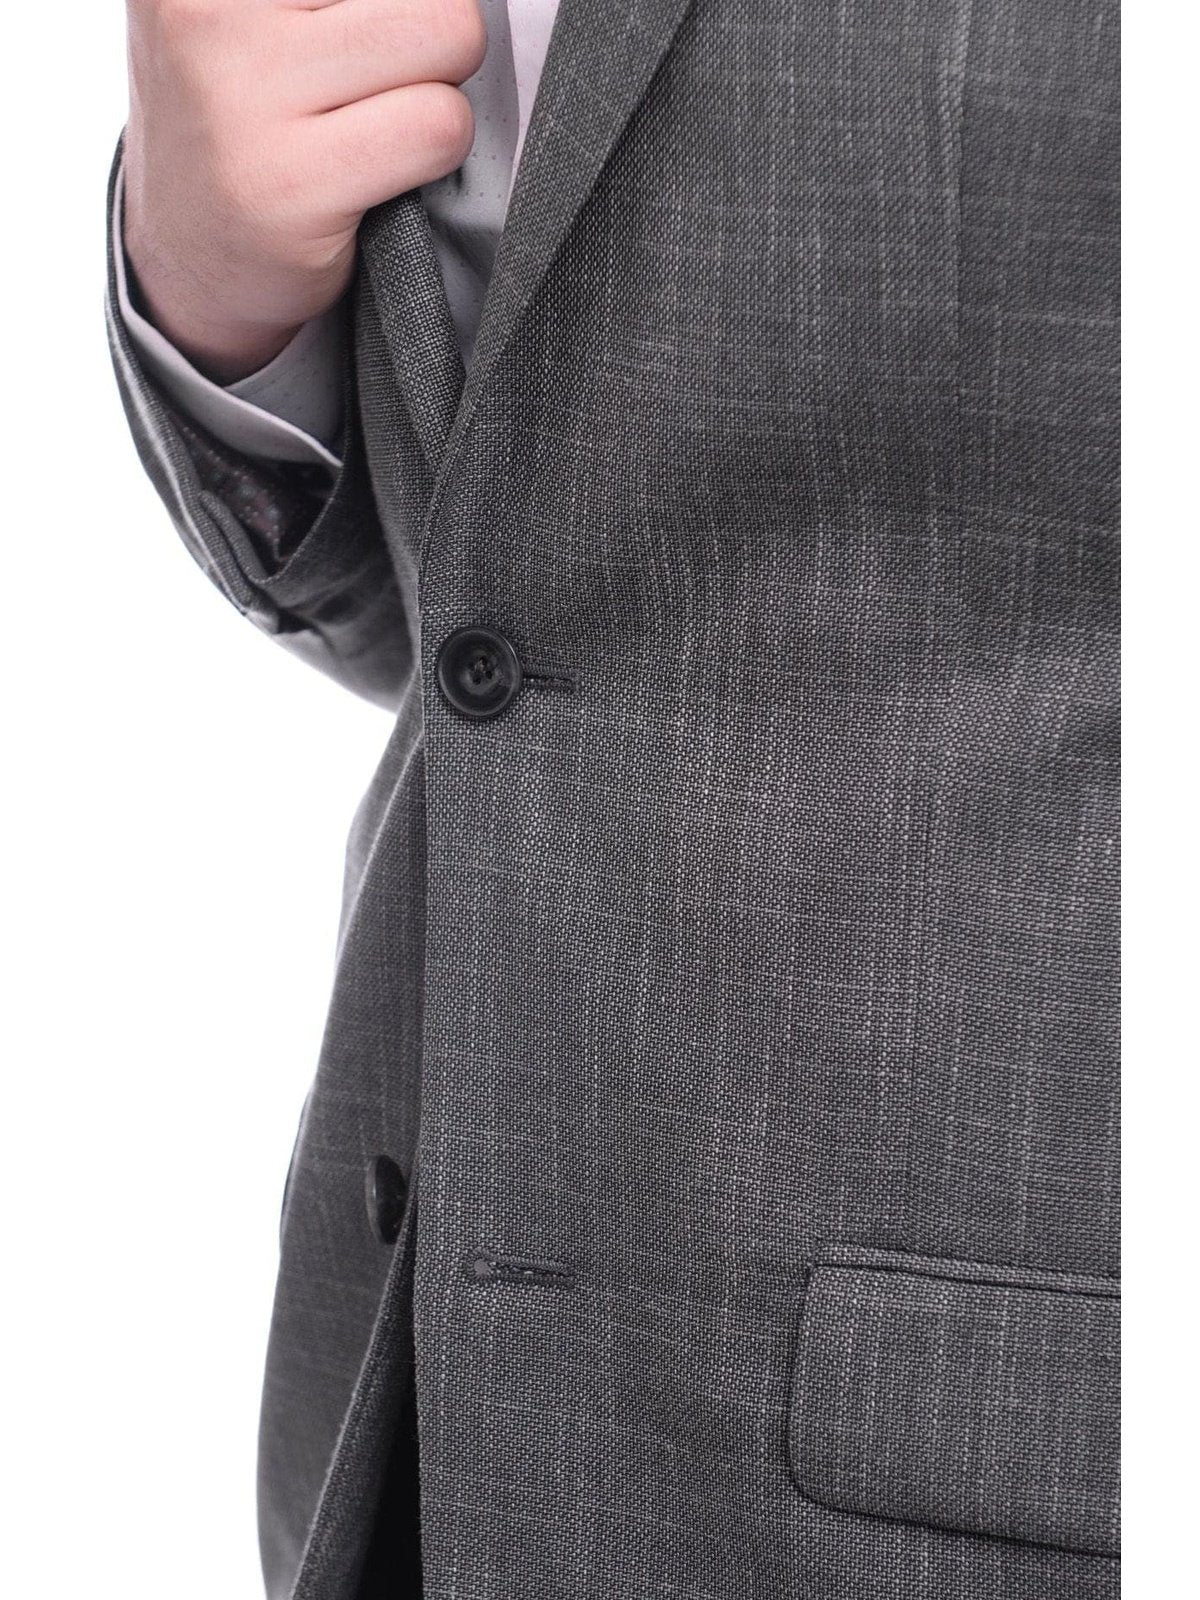 Michael Kors BLAZERS Mens Michael Kors Classic Fit Solid Gray Two Button Blazer Sportcoat Jacket